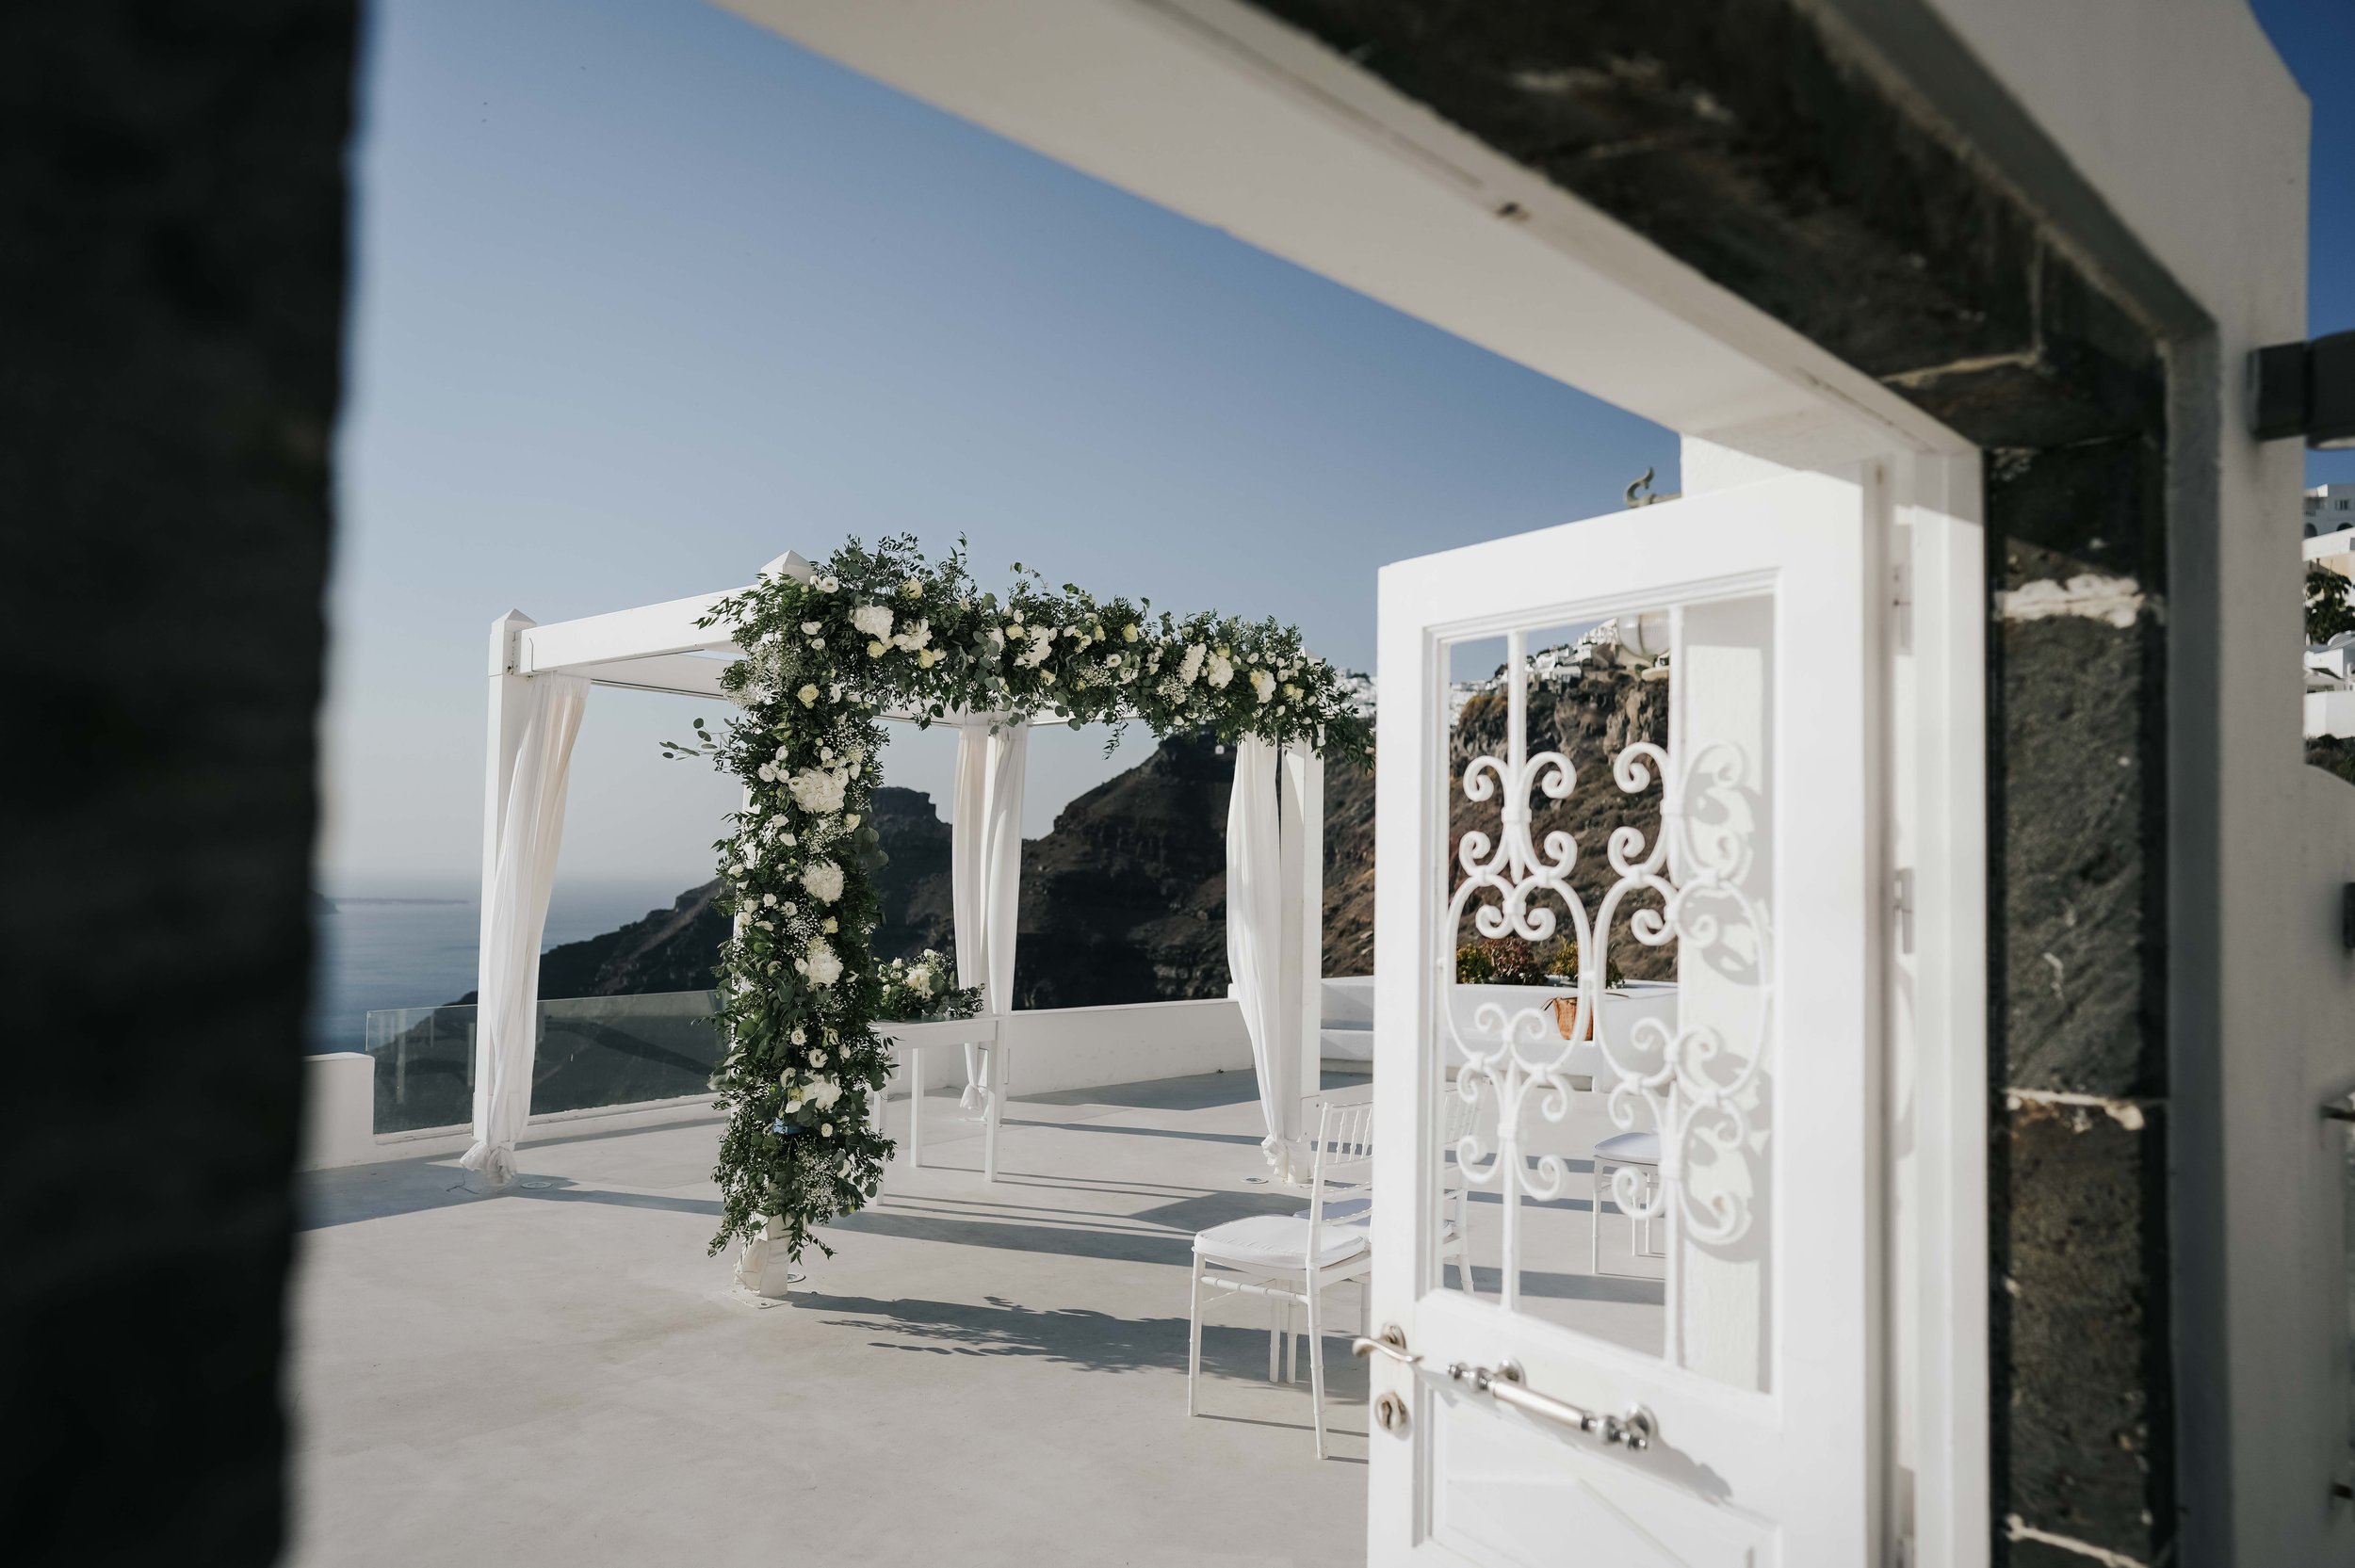 Santorini destination wedding Photography based in the UK - 015.jpg